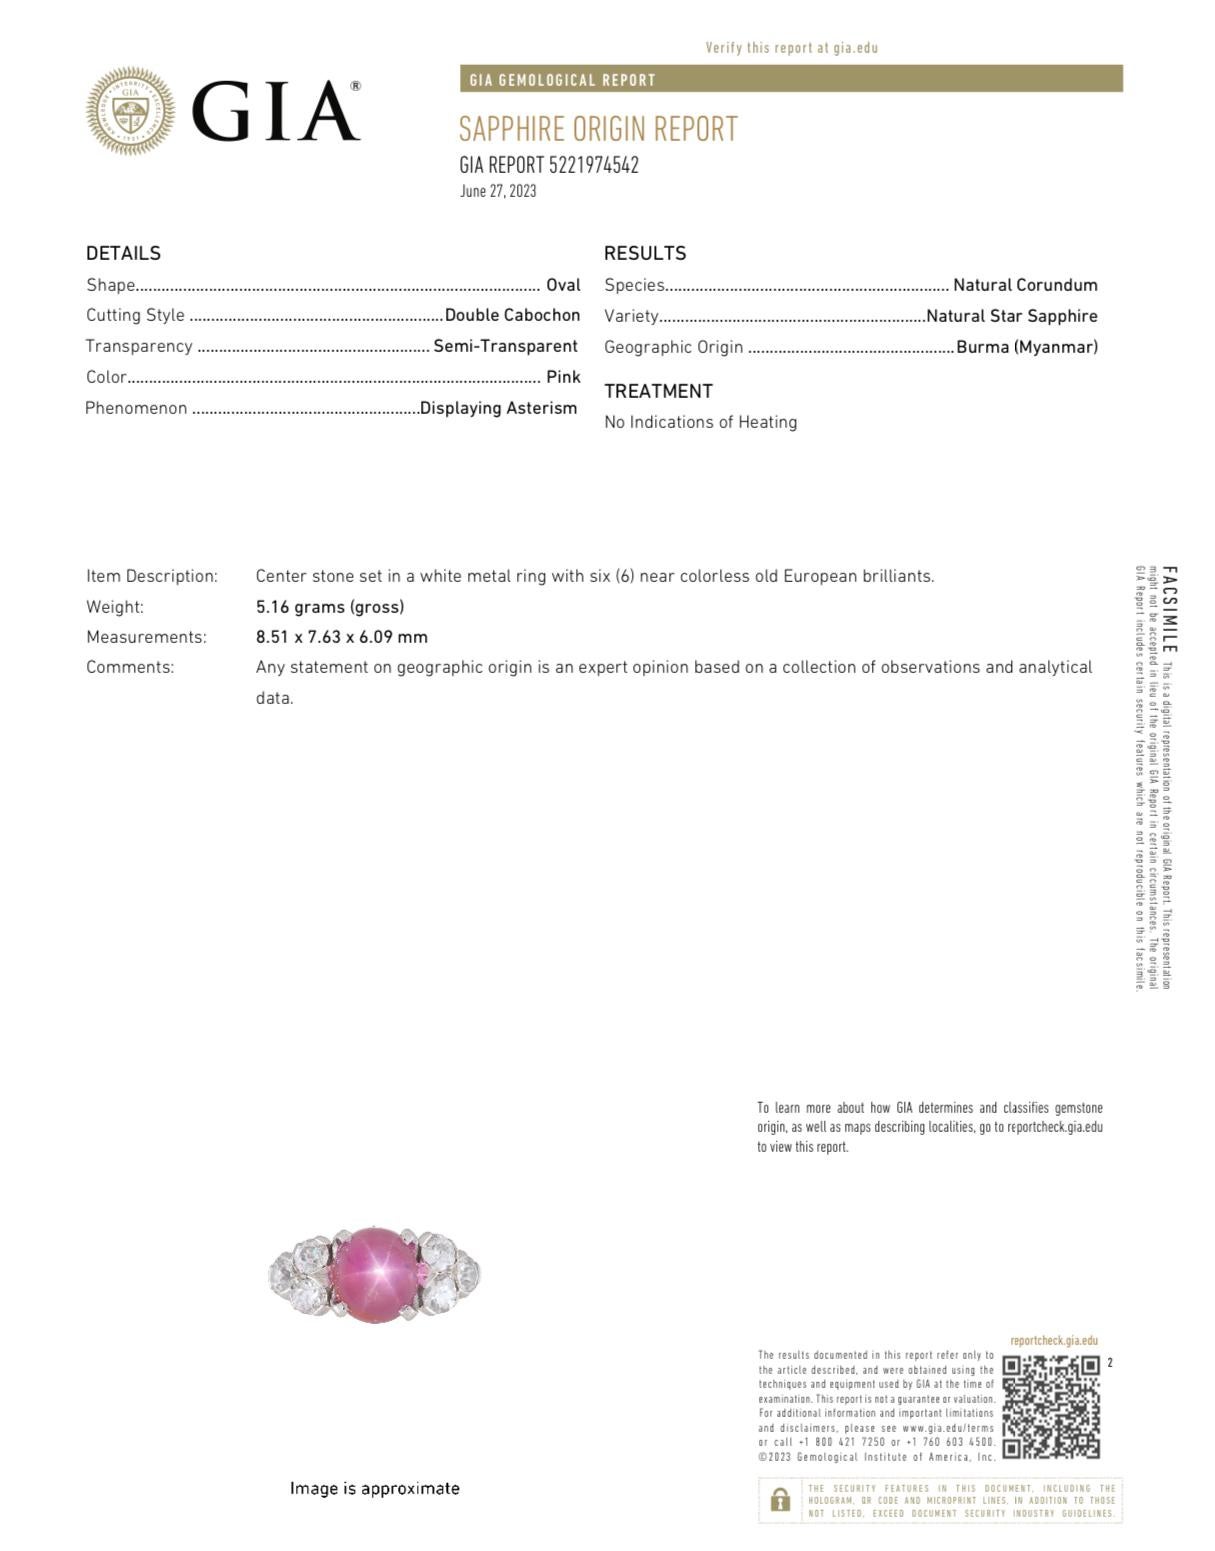 pink star sapphire value